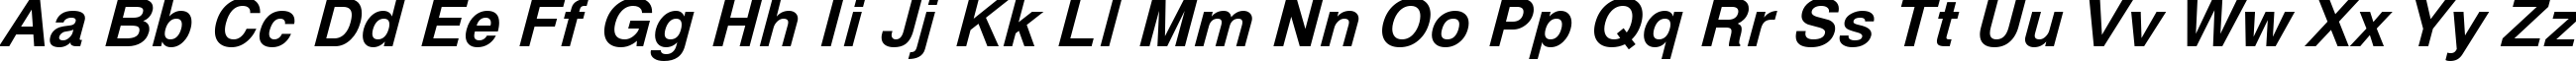 Пример написания английского алфавита шрифтом Svoboda Bold Italic